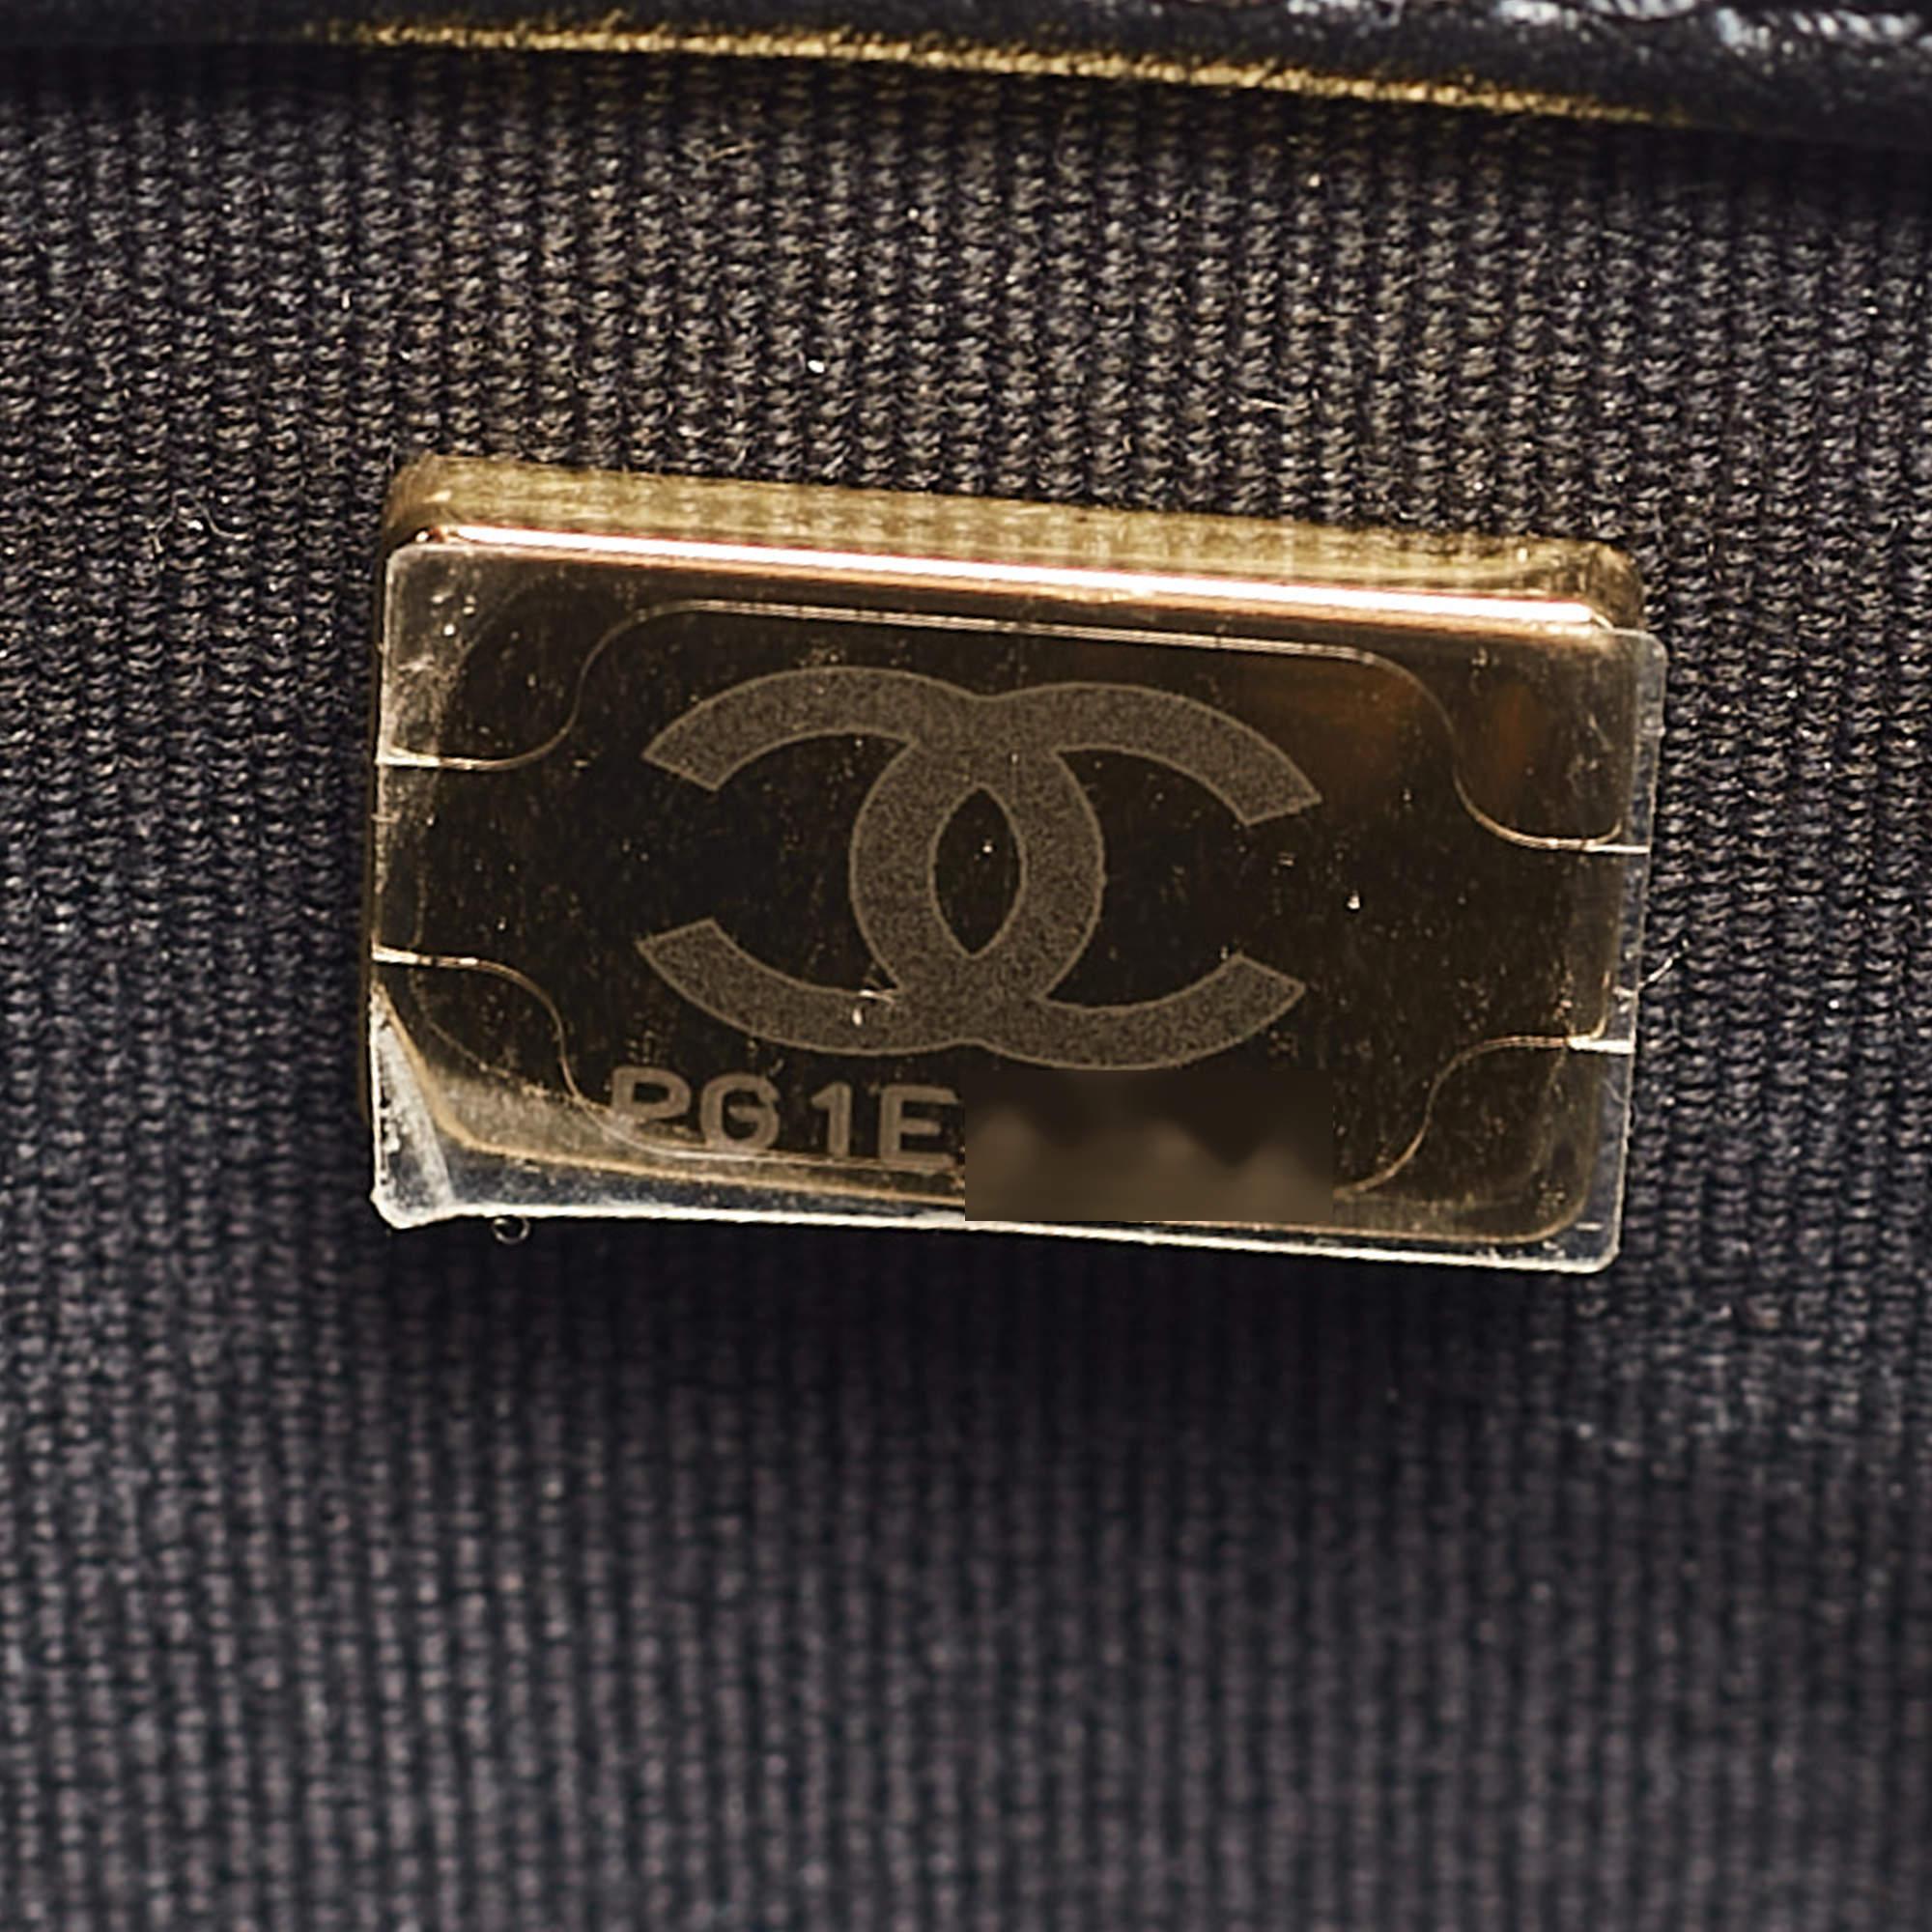 Chanel - Mini sac à rabat My Own Frame en cuir et tweed noir et blanc 2